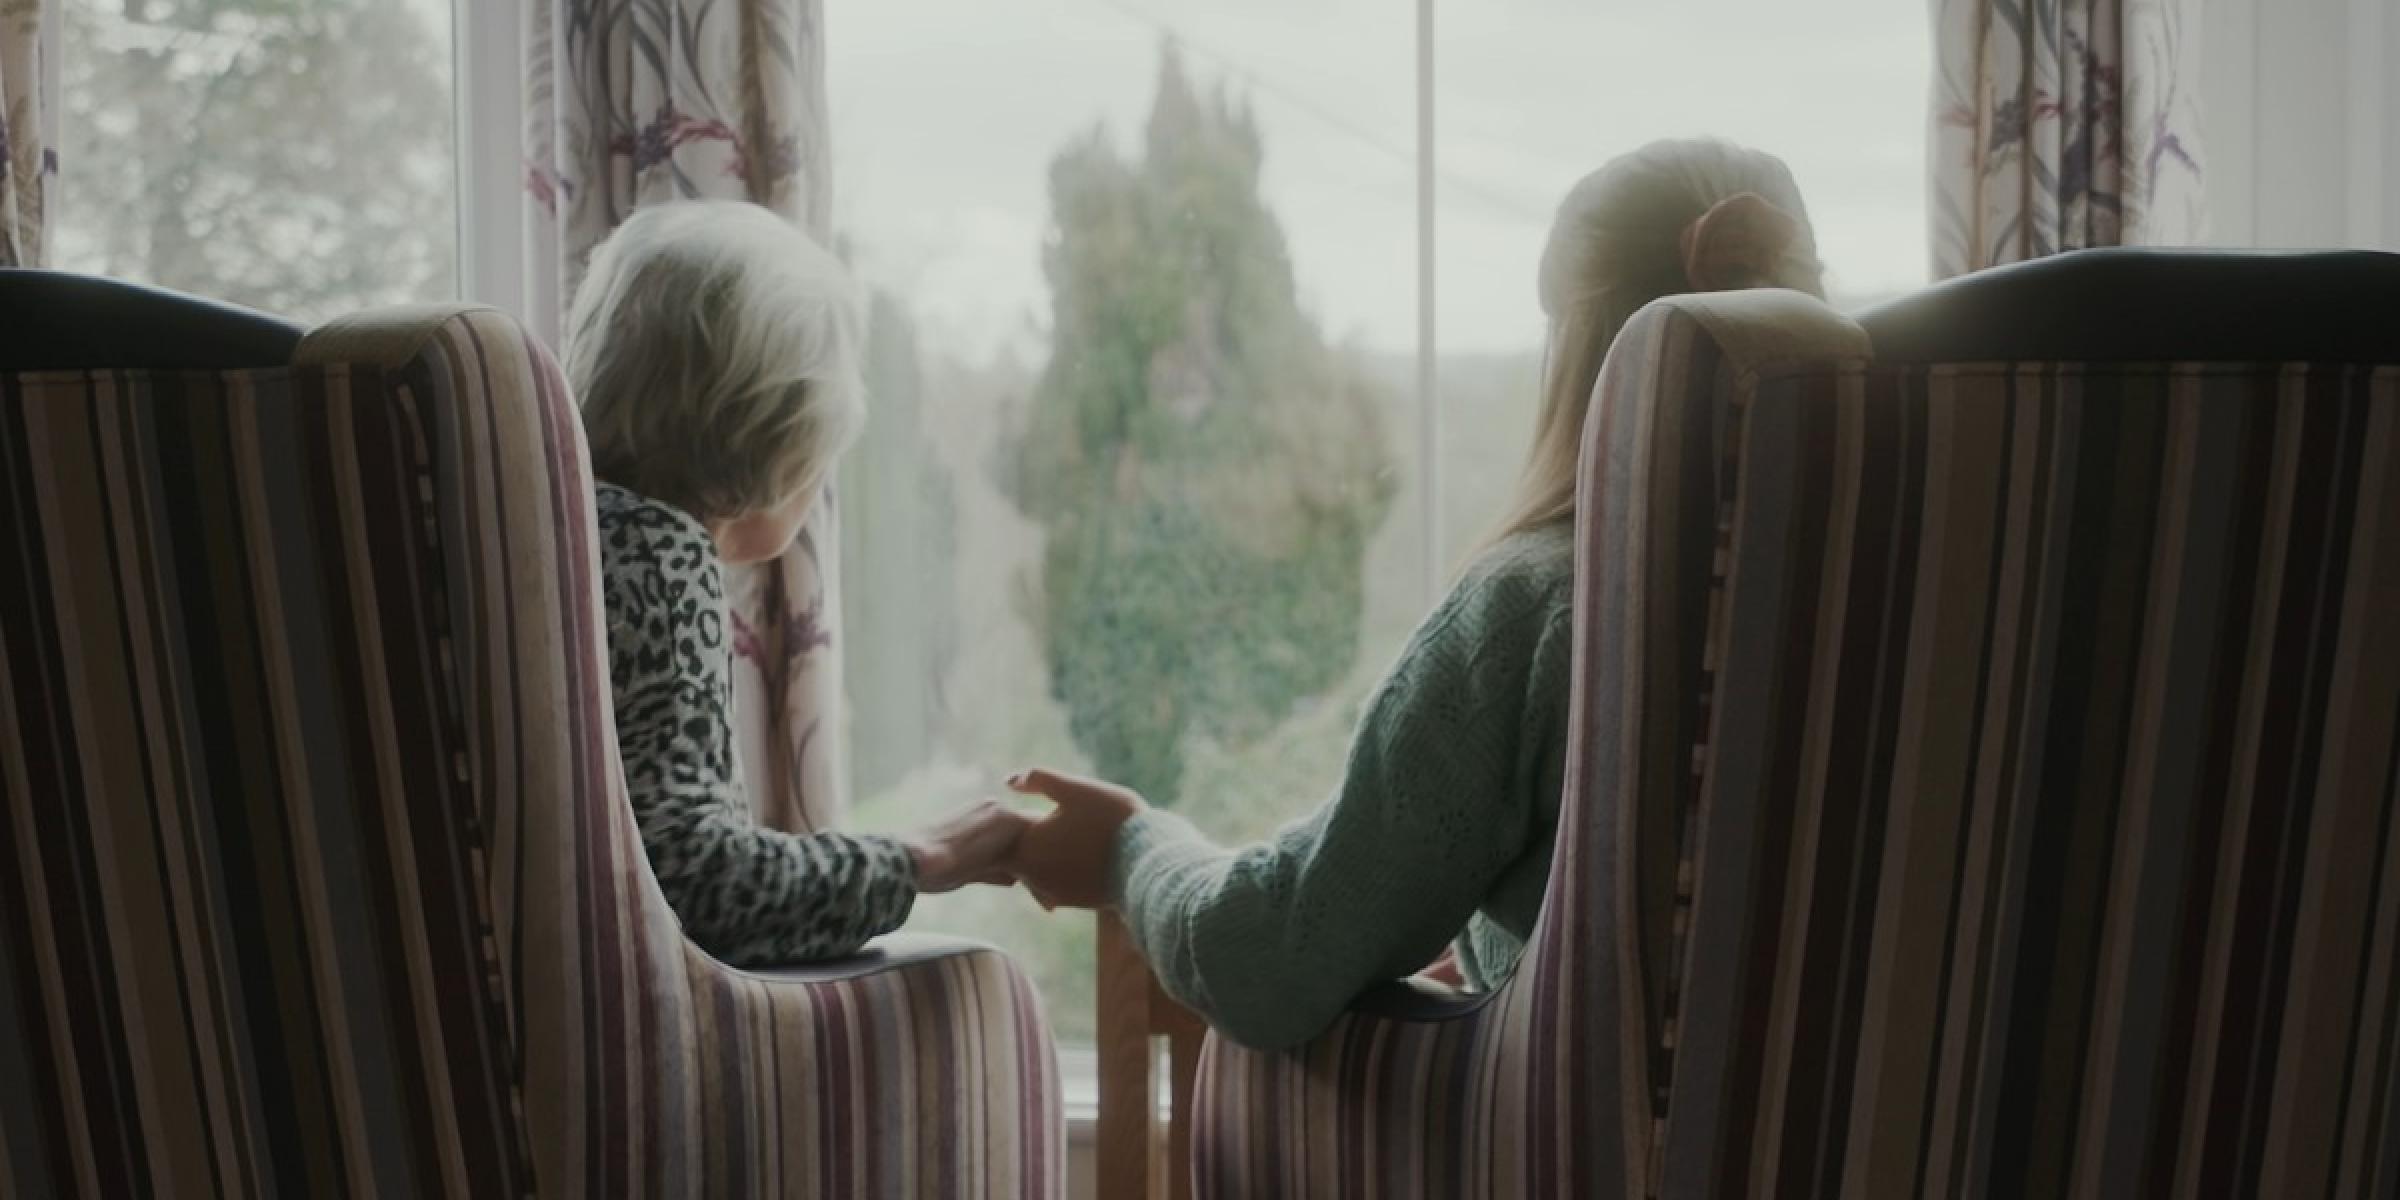 Saskia and Teresa holding hands in Teresa's care home